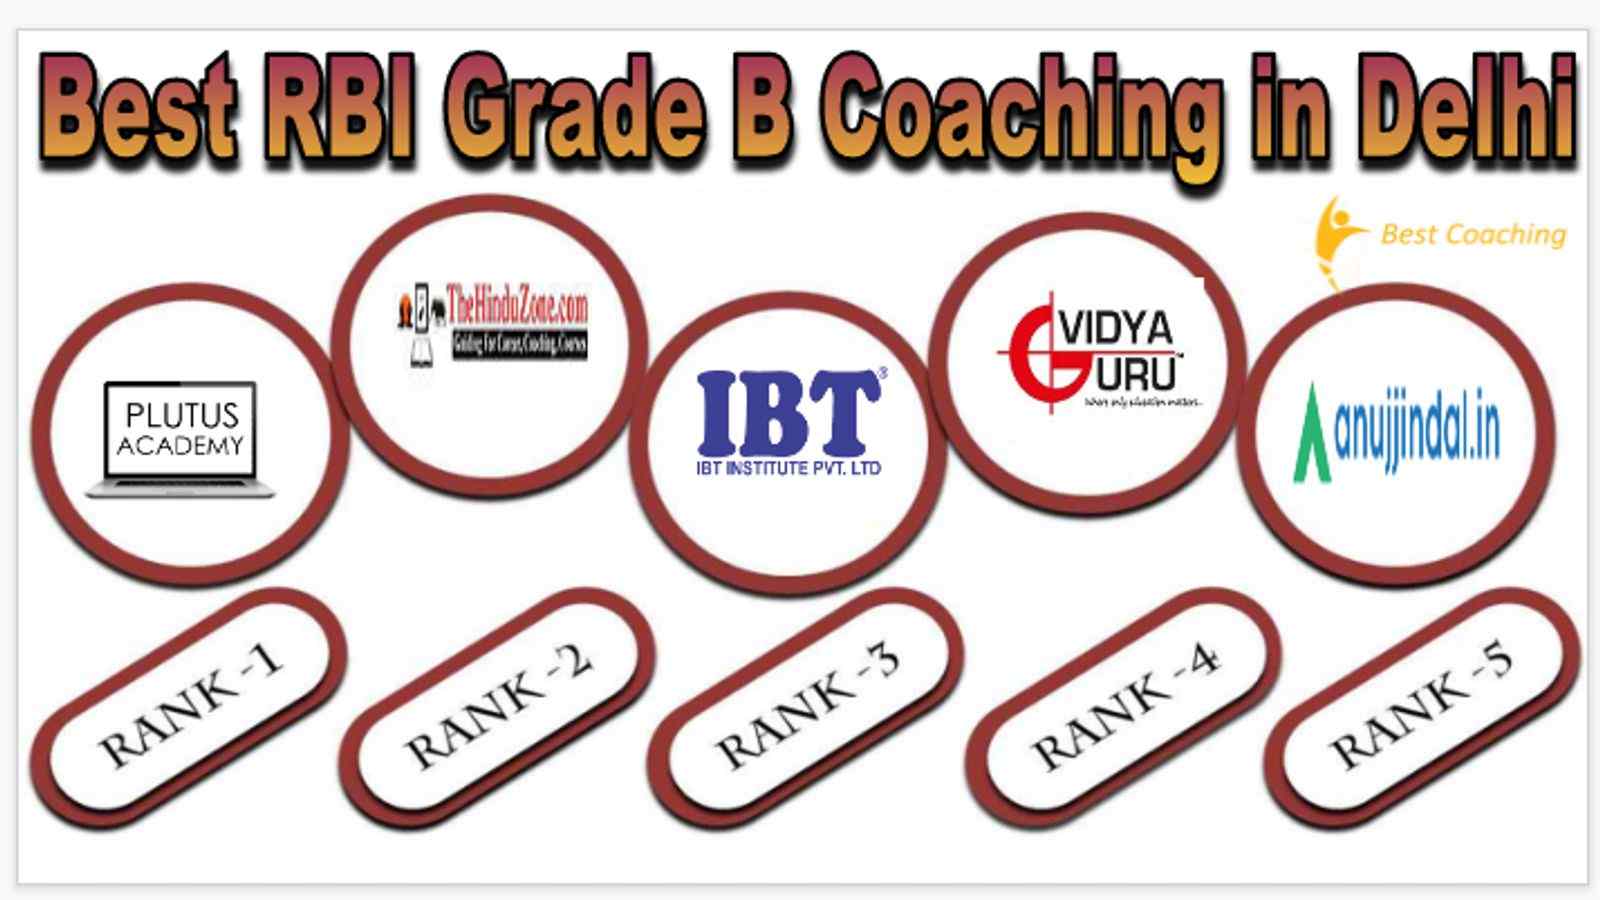 Best RBI Grade B Coaching in Delhi